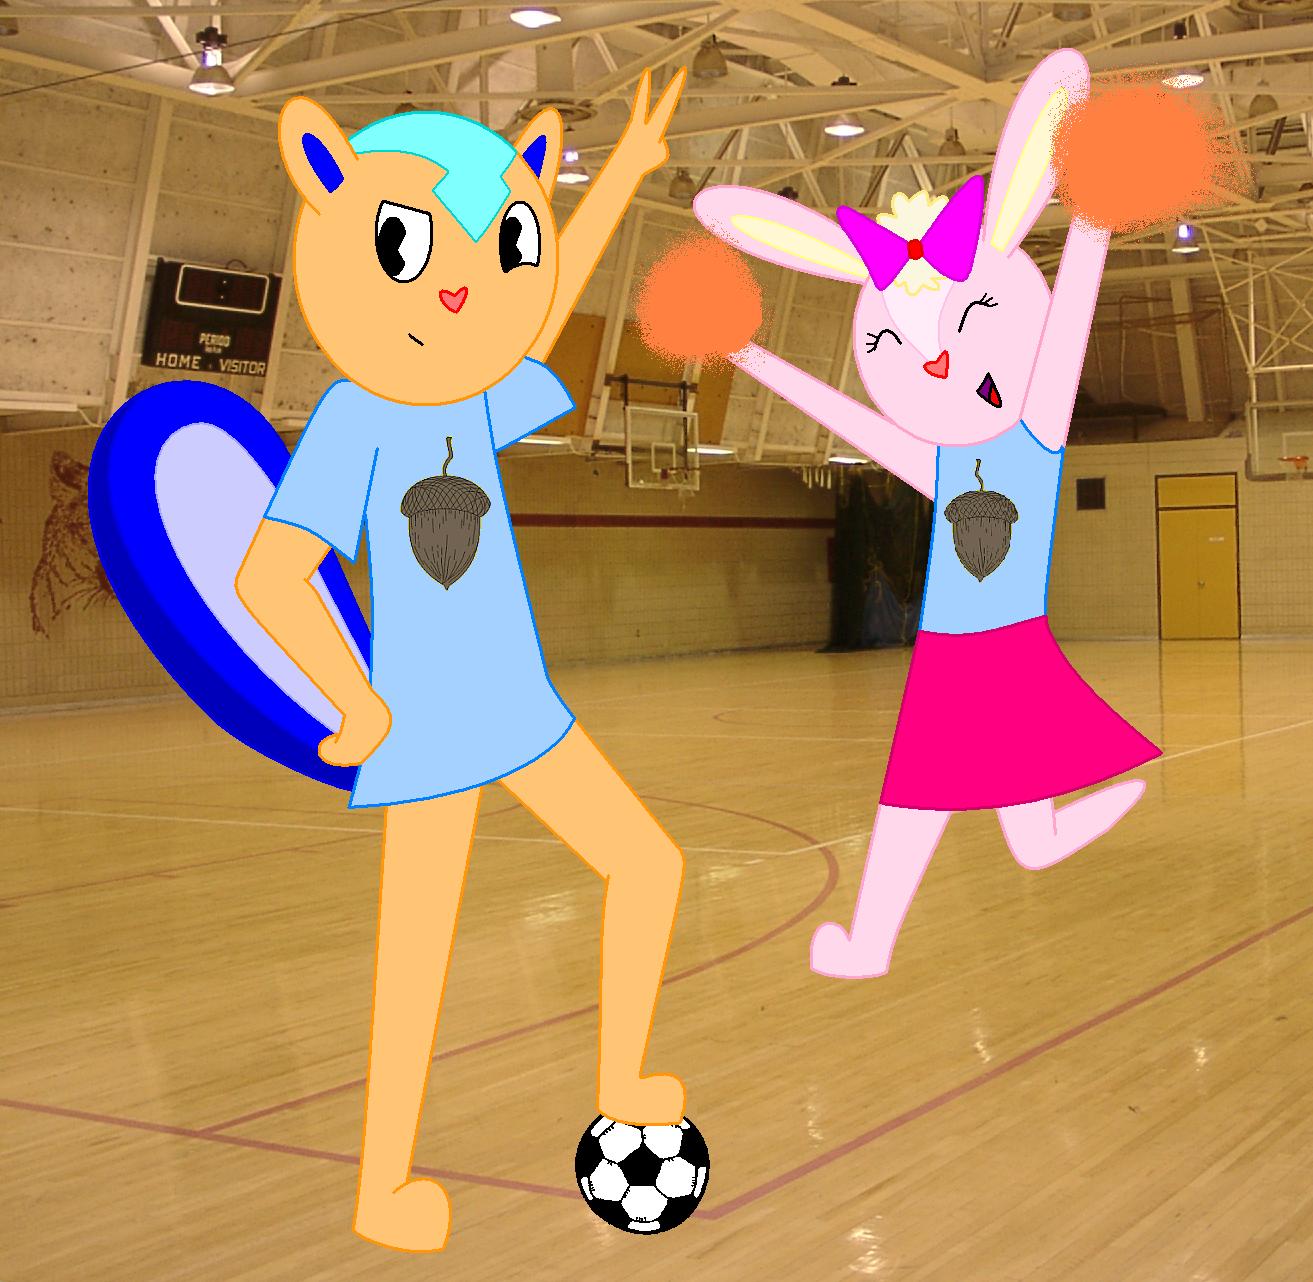 SoccerPlayer and Cheerleader by GavImp